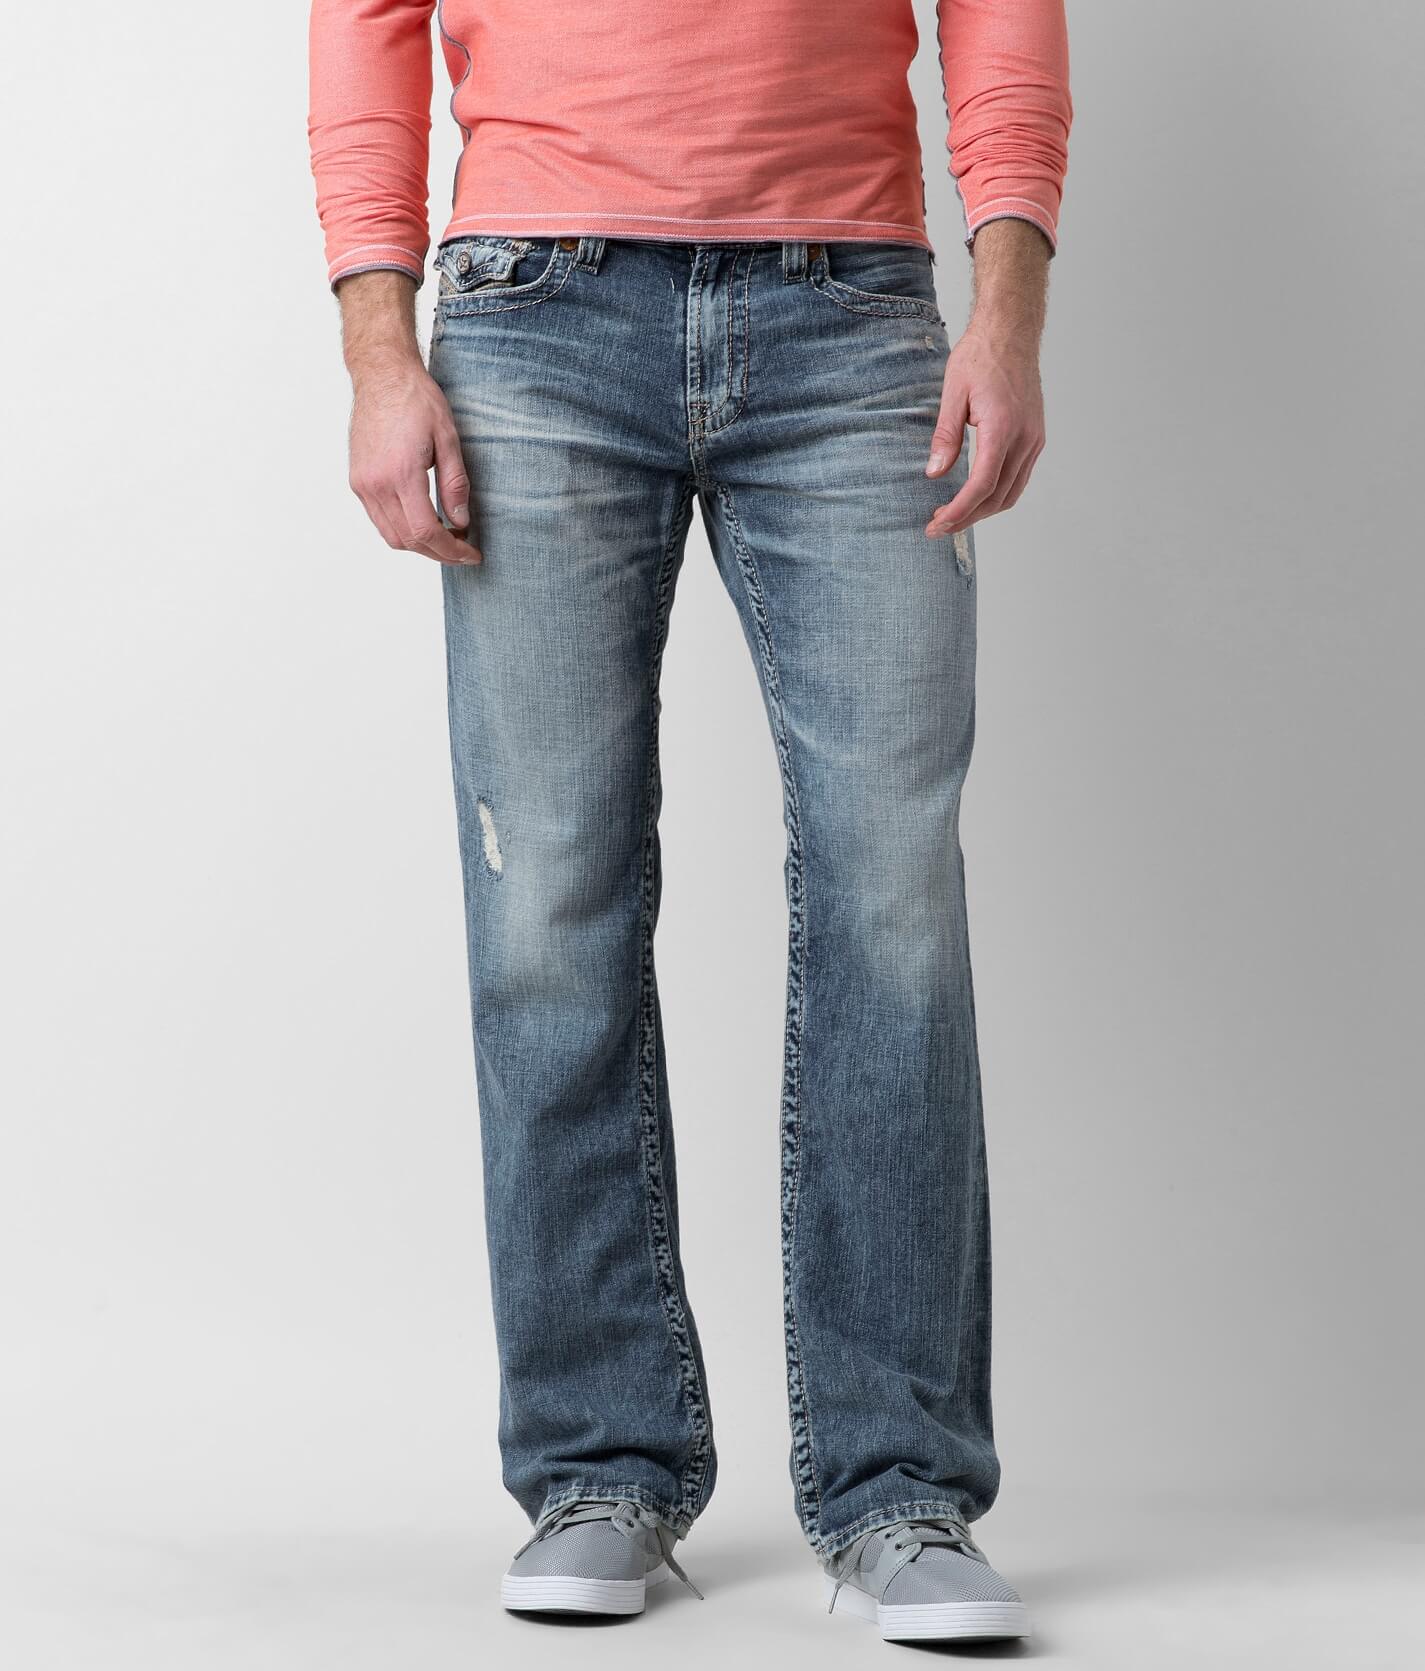 big star jeans mens price